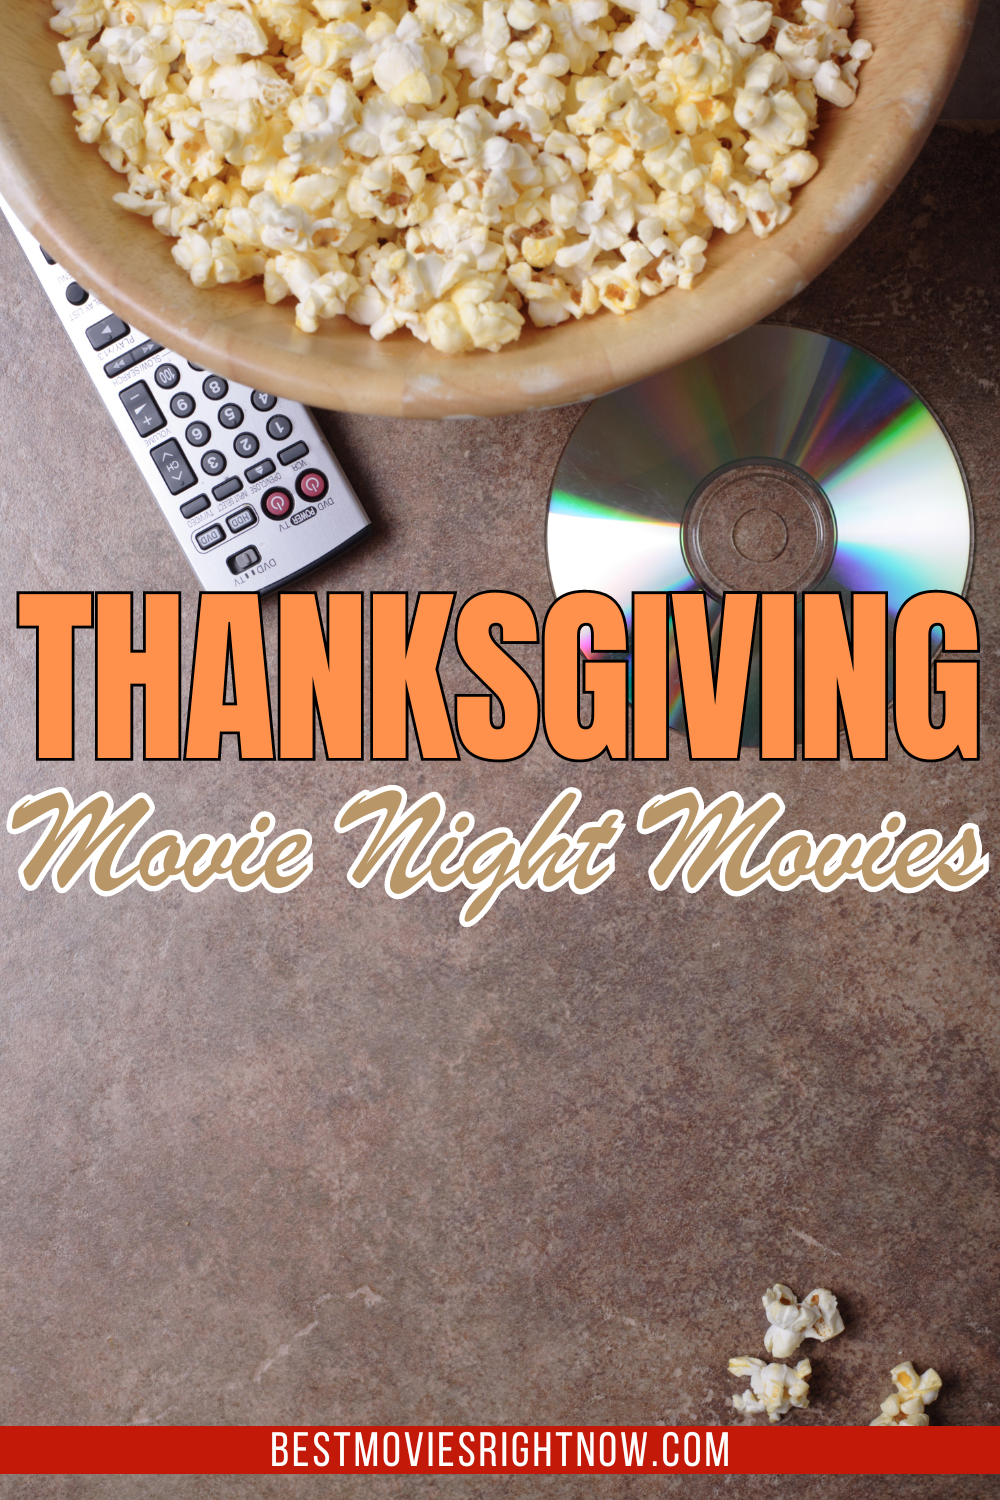 Movie Night with text: 